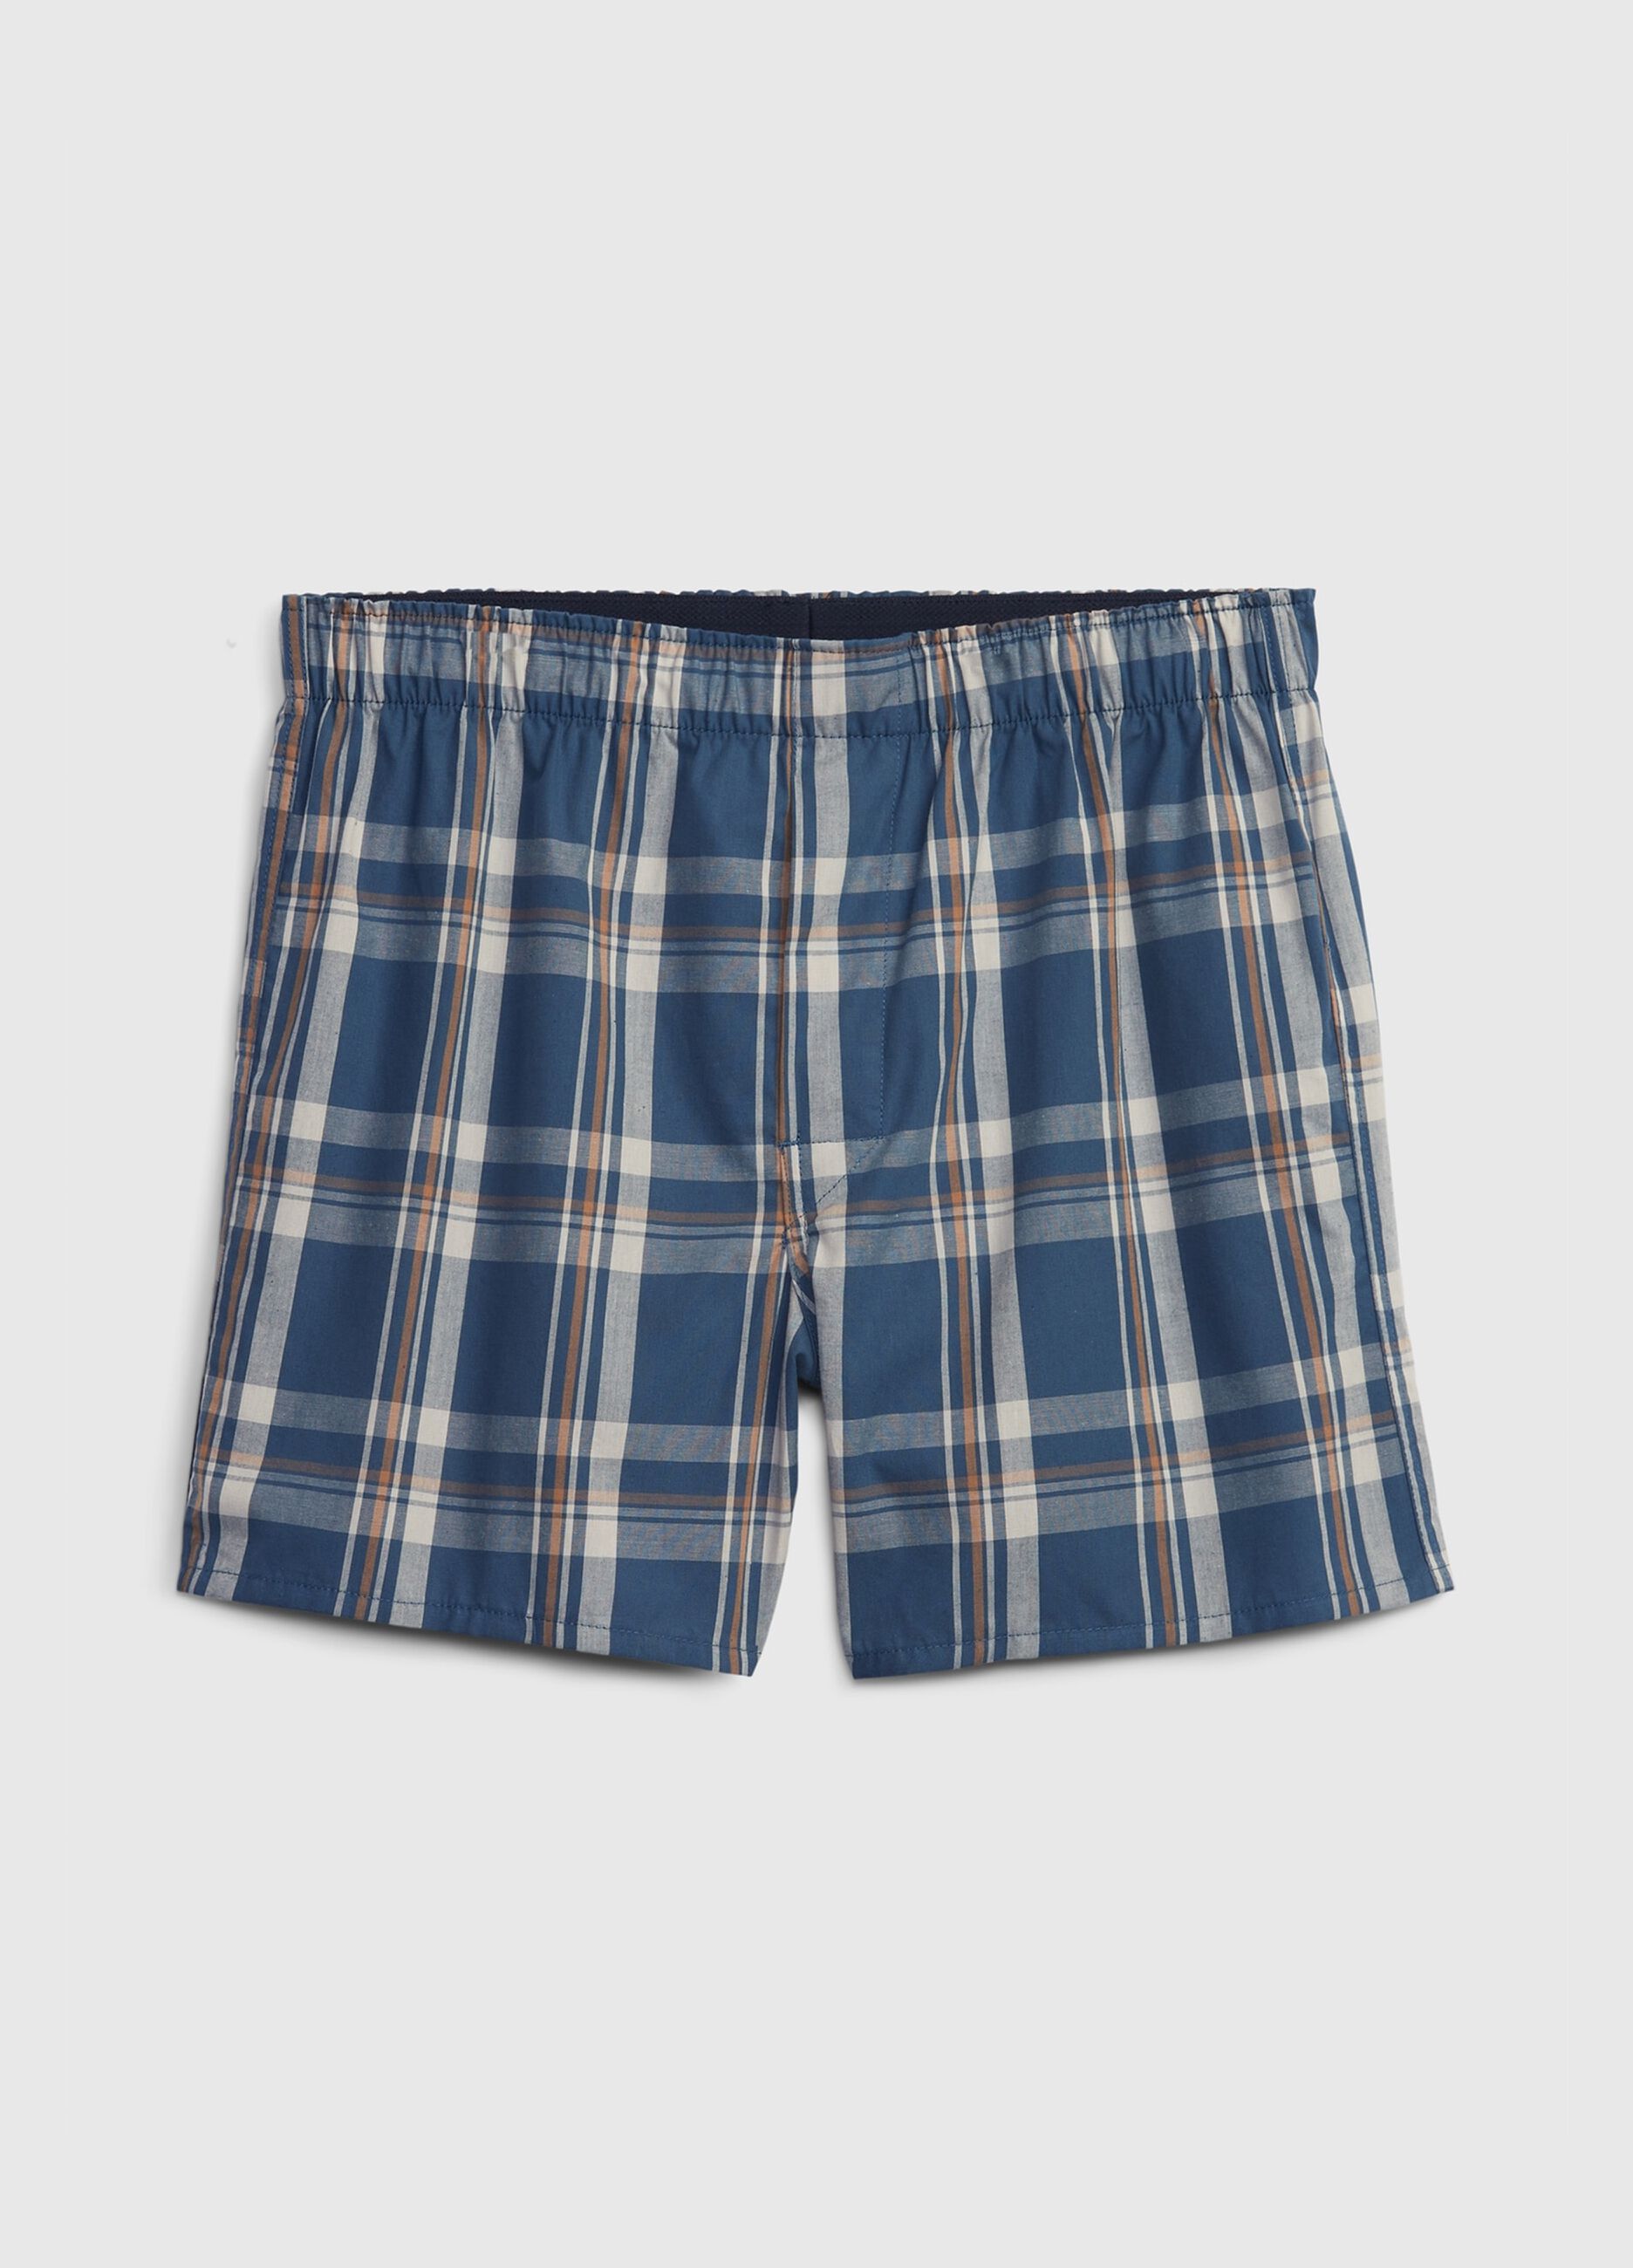 Cotton boxer shorts with tartan pattern